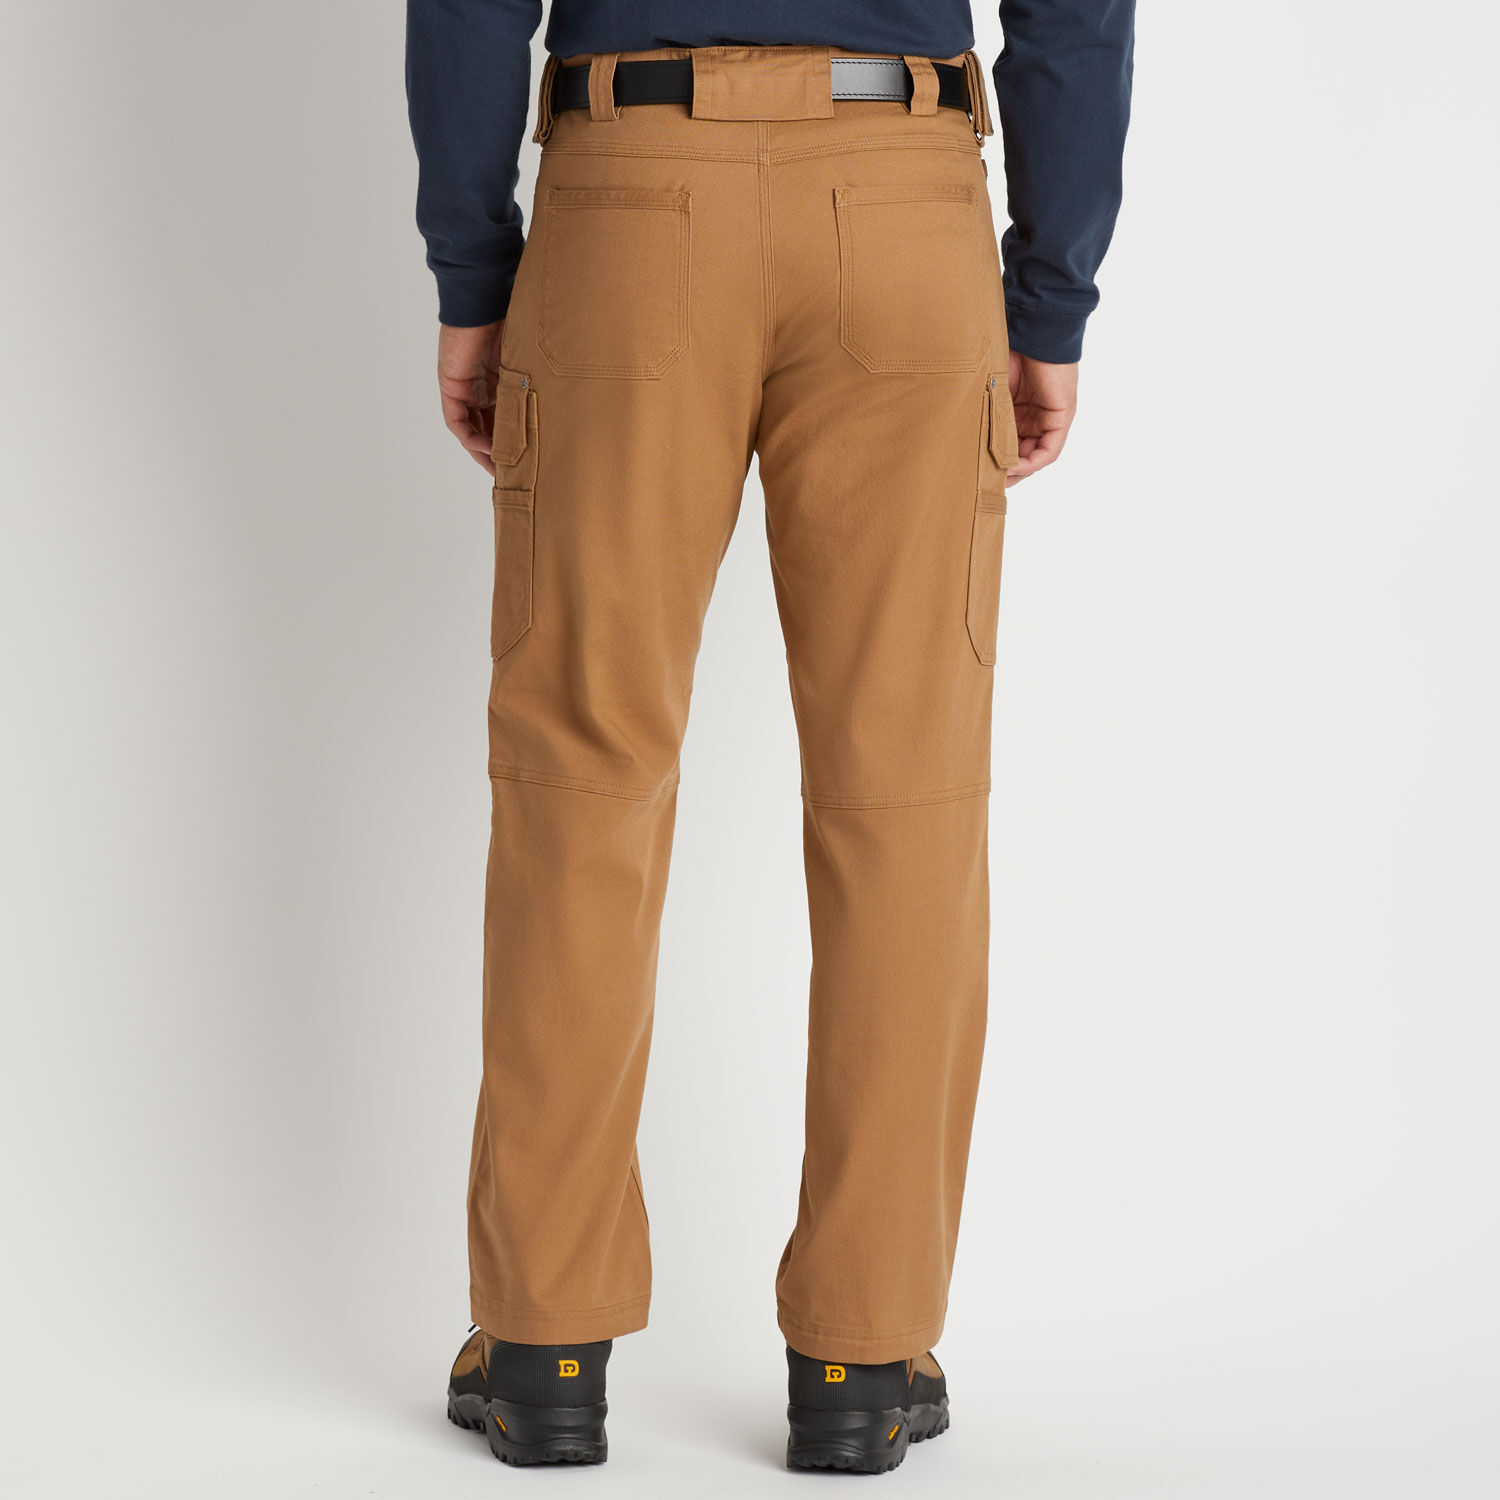 Men's DuluthFlex Fire Hose Standard Fit Ultimate Cargo Pants 